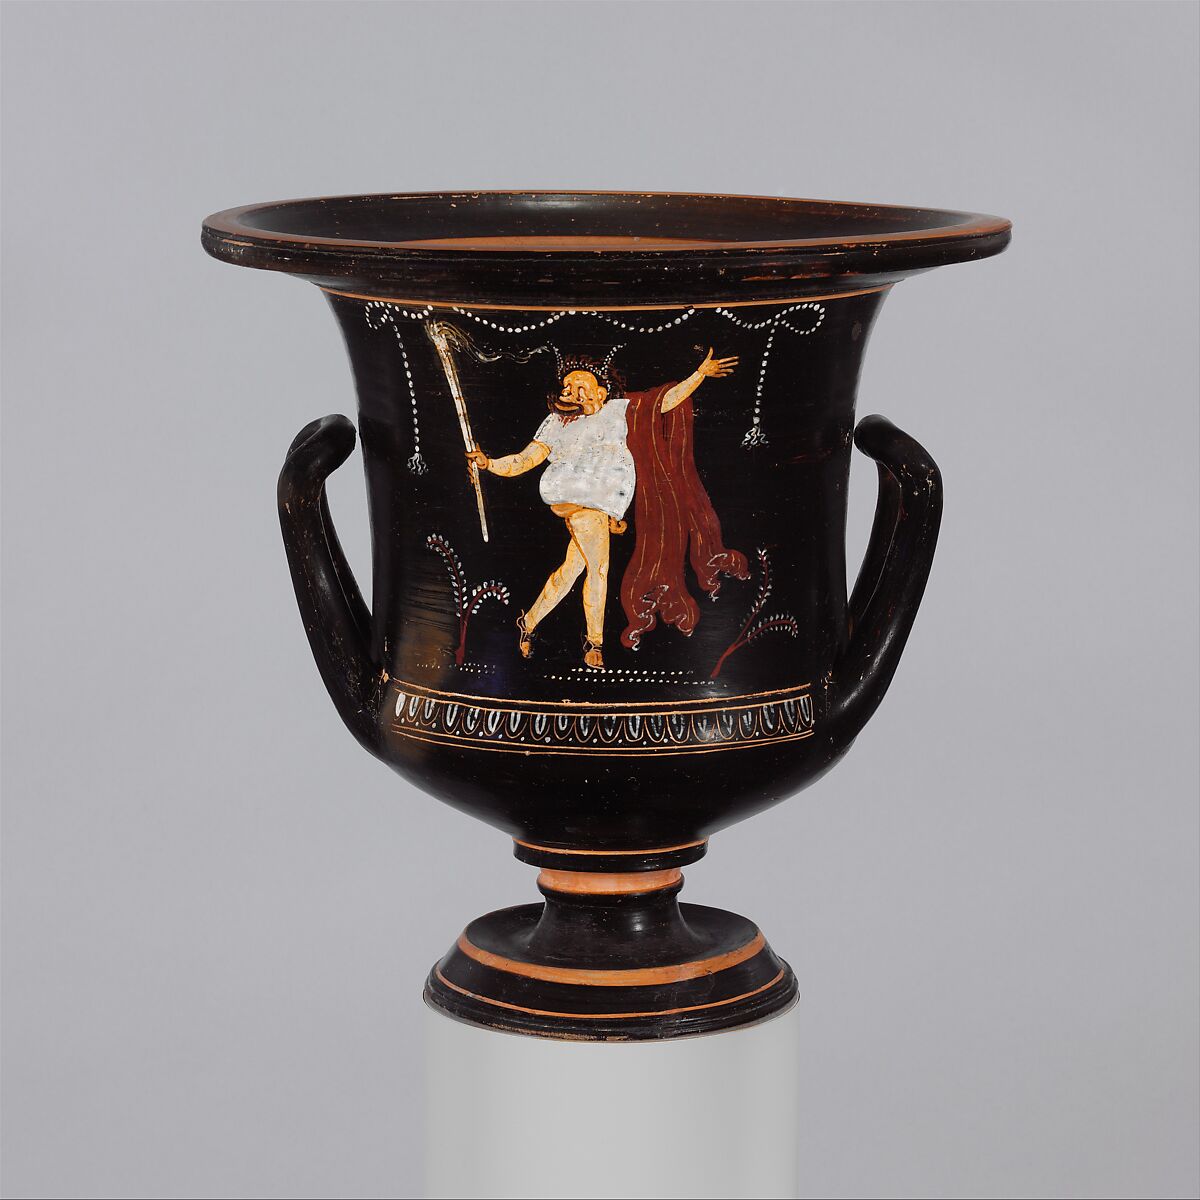 Terracotta calyx-krater (mixing bowl), Attributed to the Konnakis Group, Terracotta, Greek, South Italian, Apulian, Gnathian 